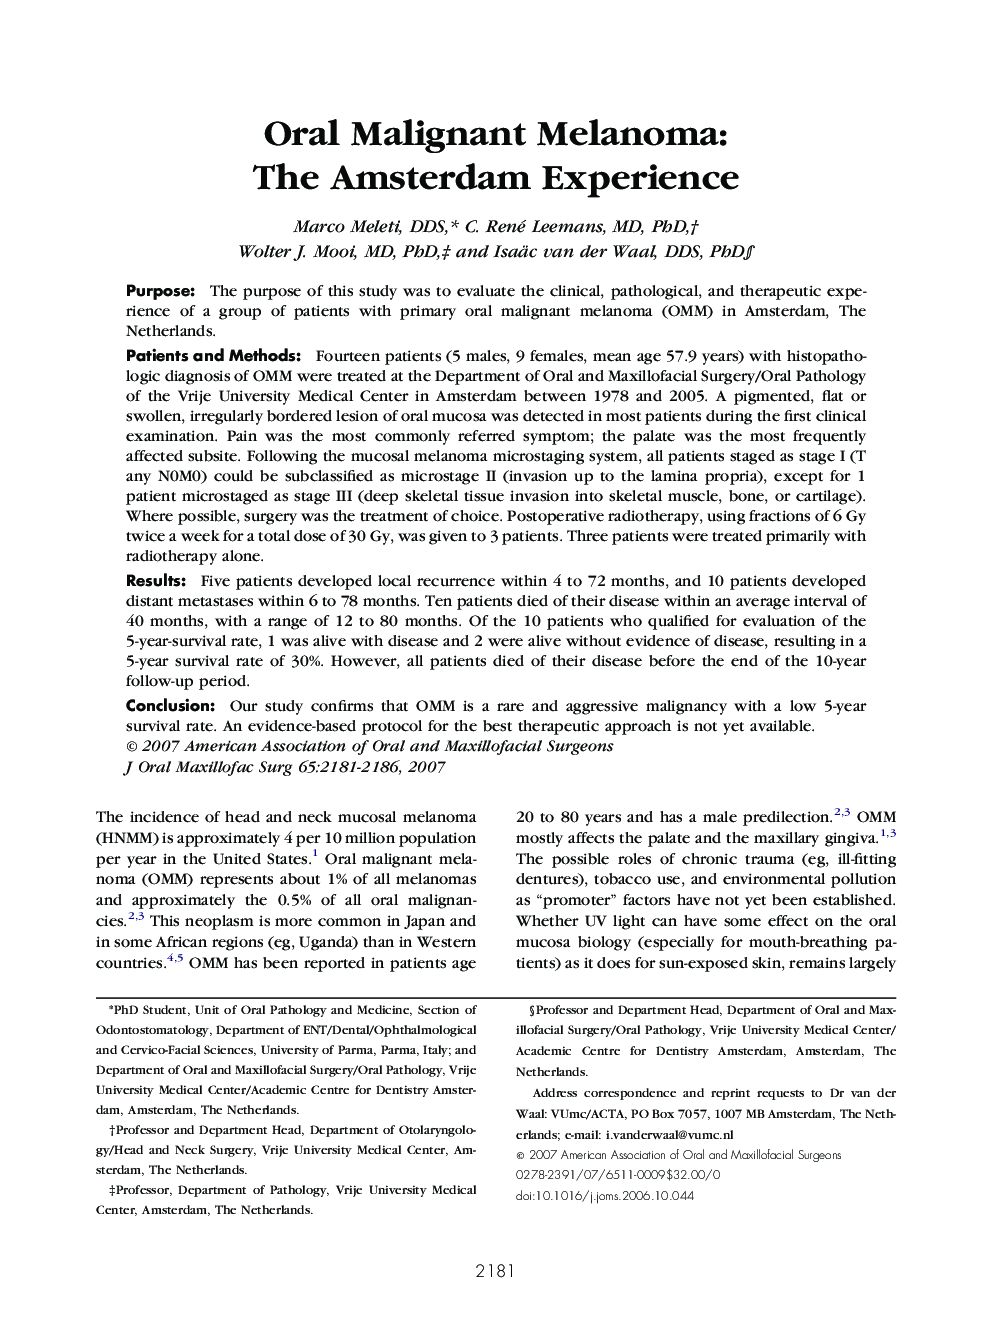 Oral Malignant Melanoma: The Amsterdam Experience